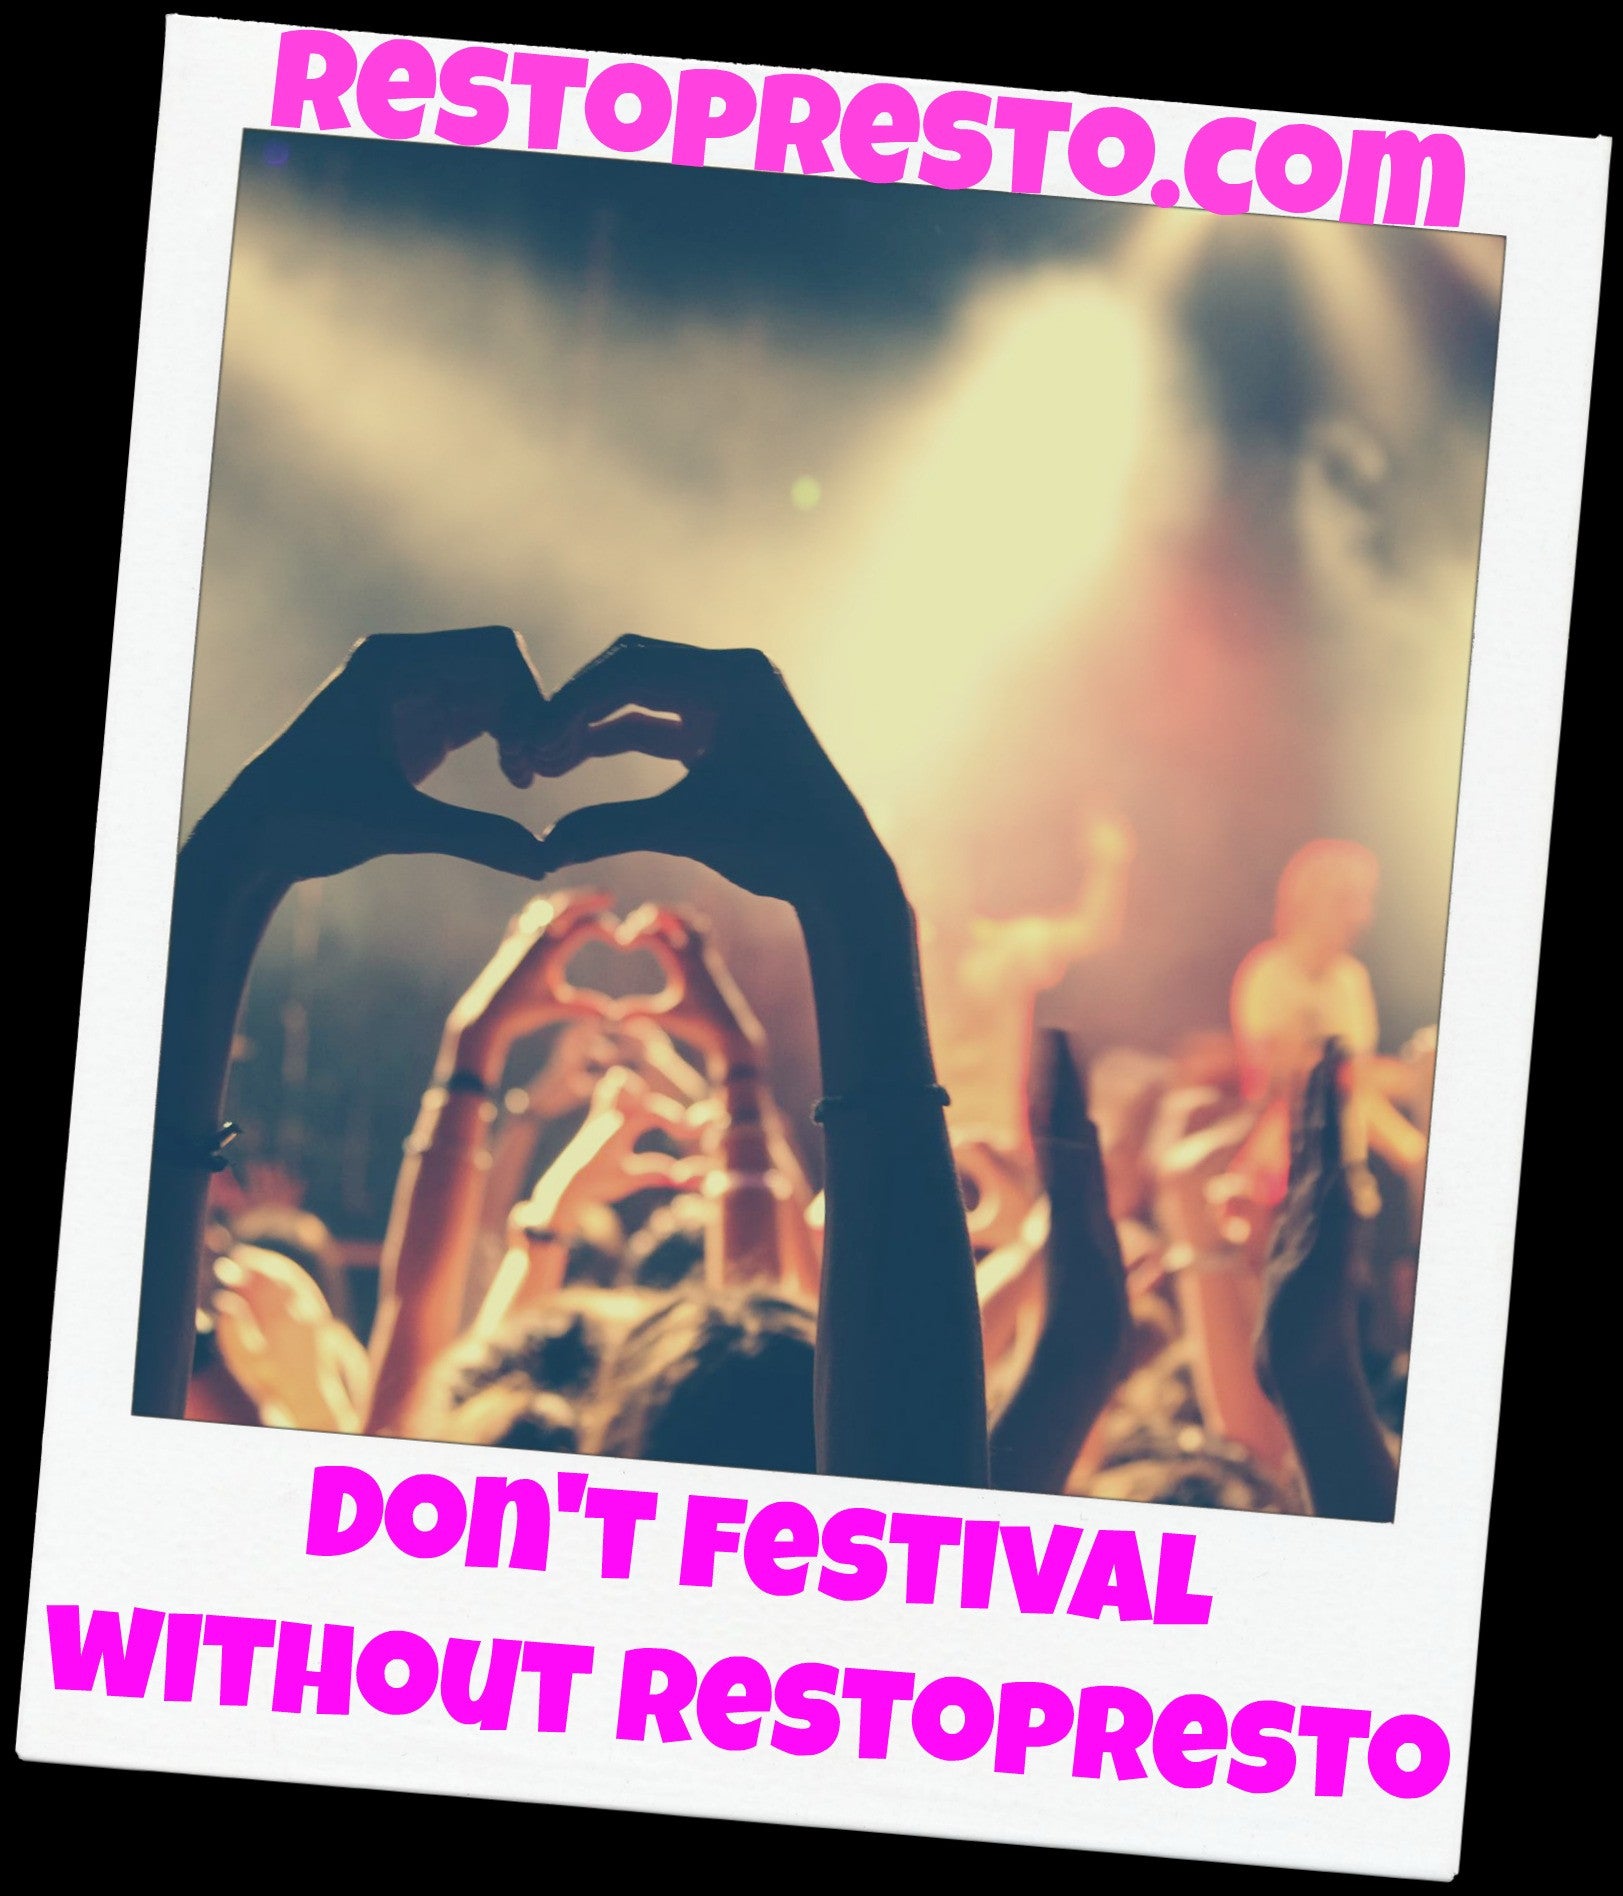 Friends don't let friends festival without RestoPresto